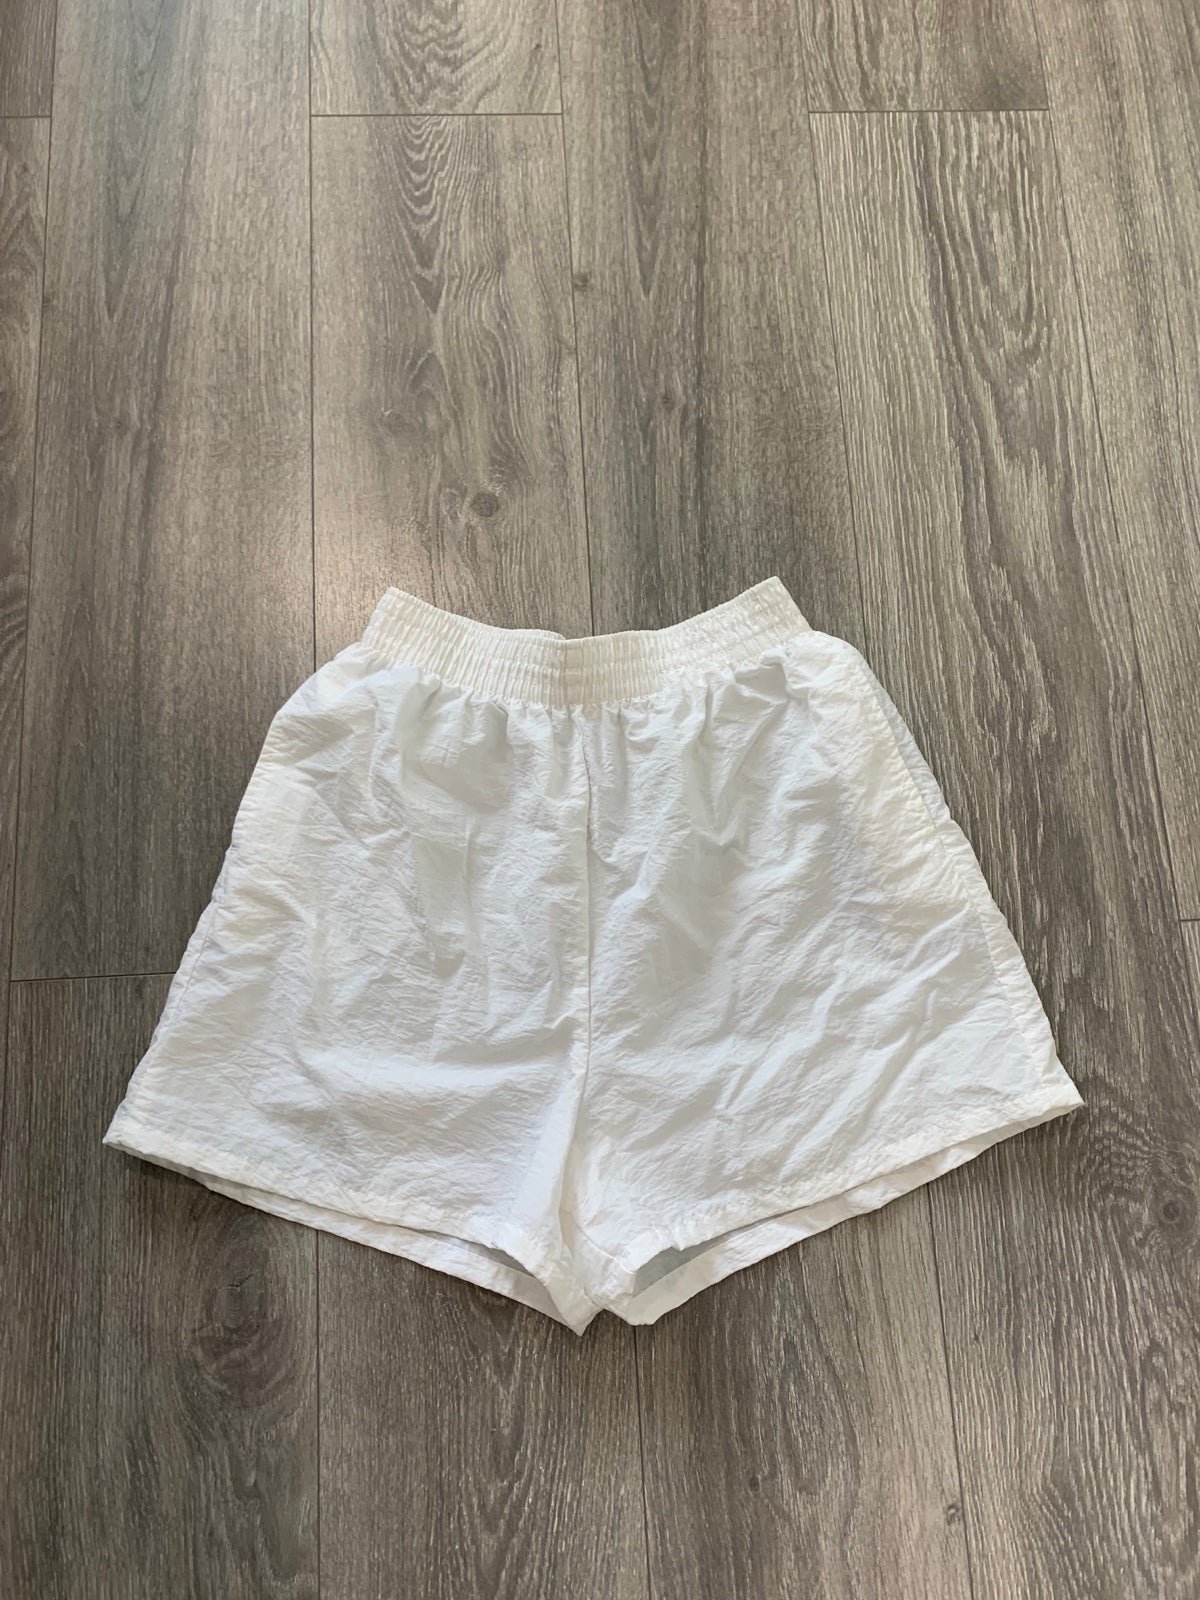 Personality Women’s Vintage White Shorts MFQwCepEg hot 